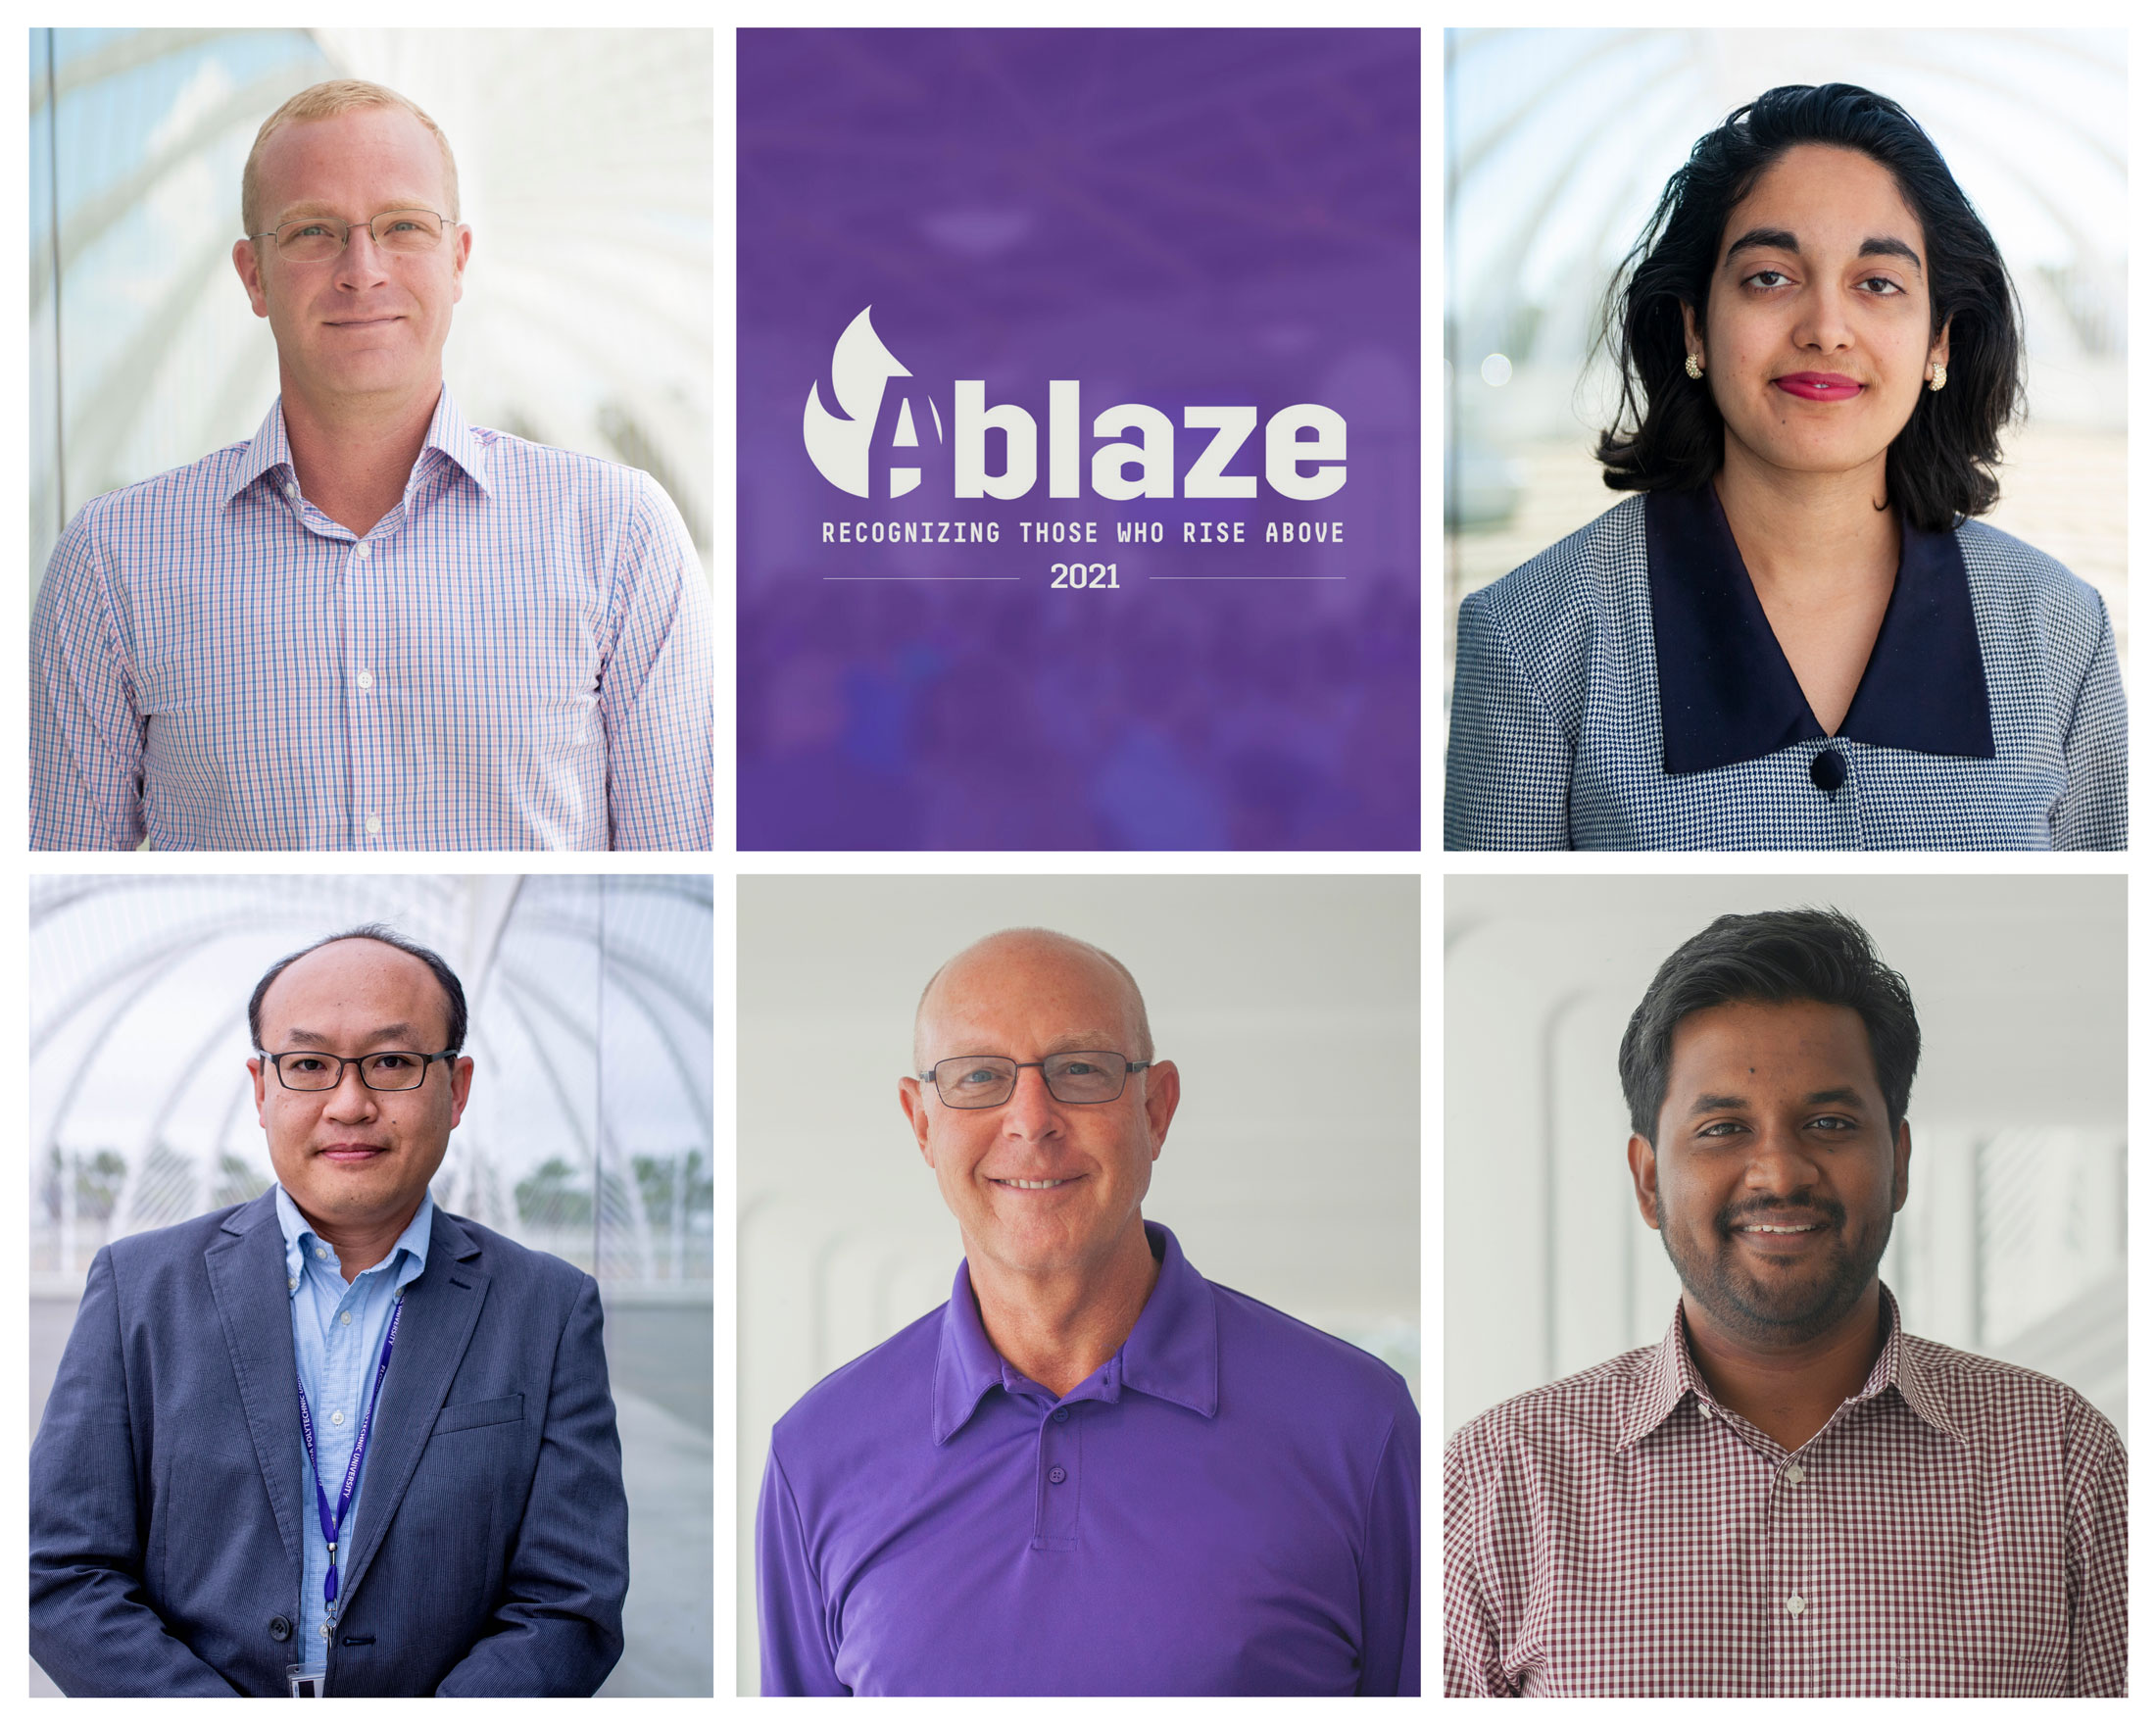 Clockwise from top left, Ablaze award recipients are Dr. Matt Bohm, Dr. Sanna Siddiqui, Dr. Ashiq Sakib, Larry Locke, and Dr. Younggil Park.